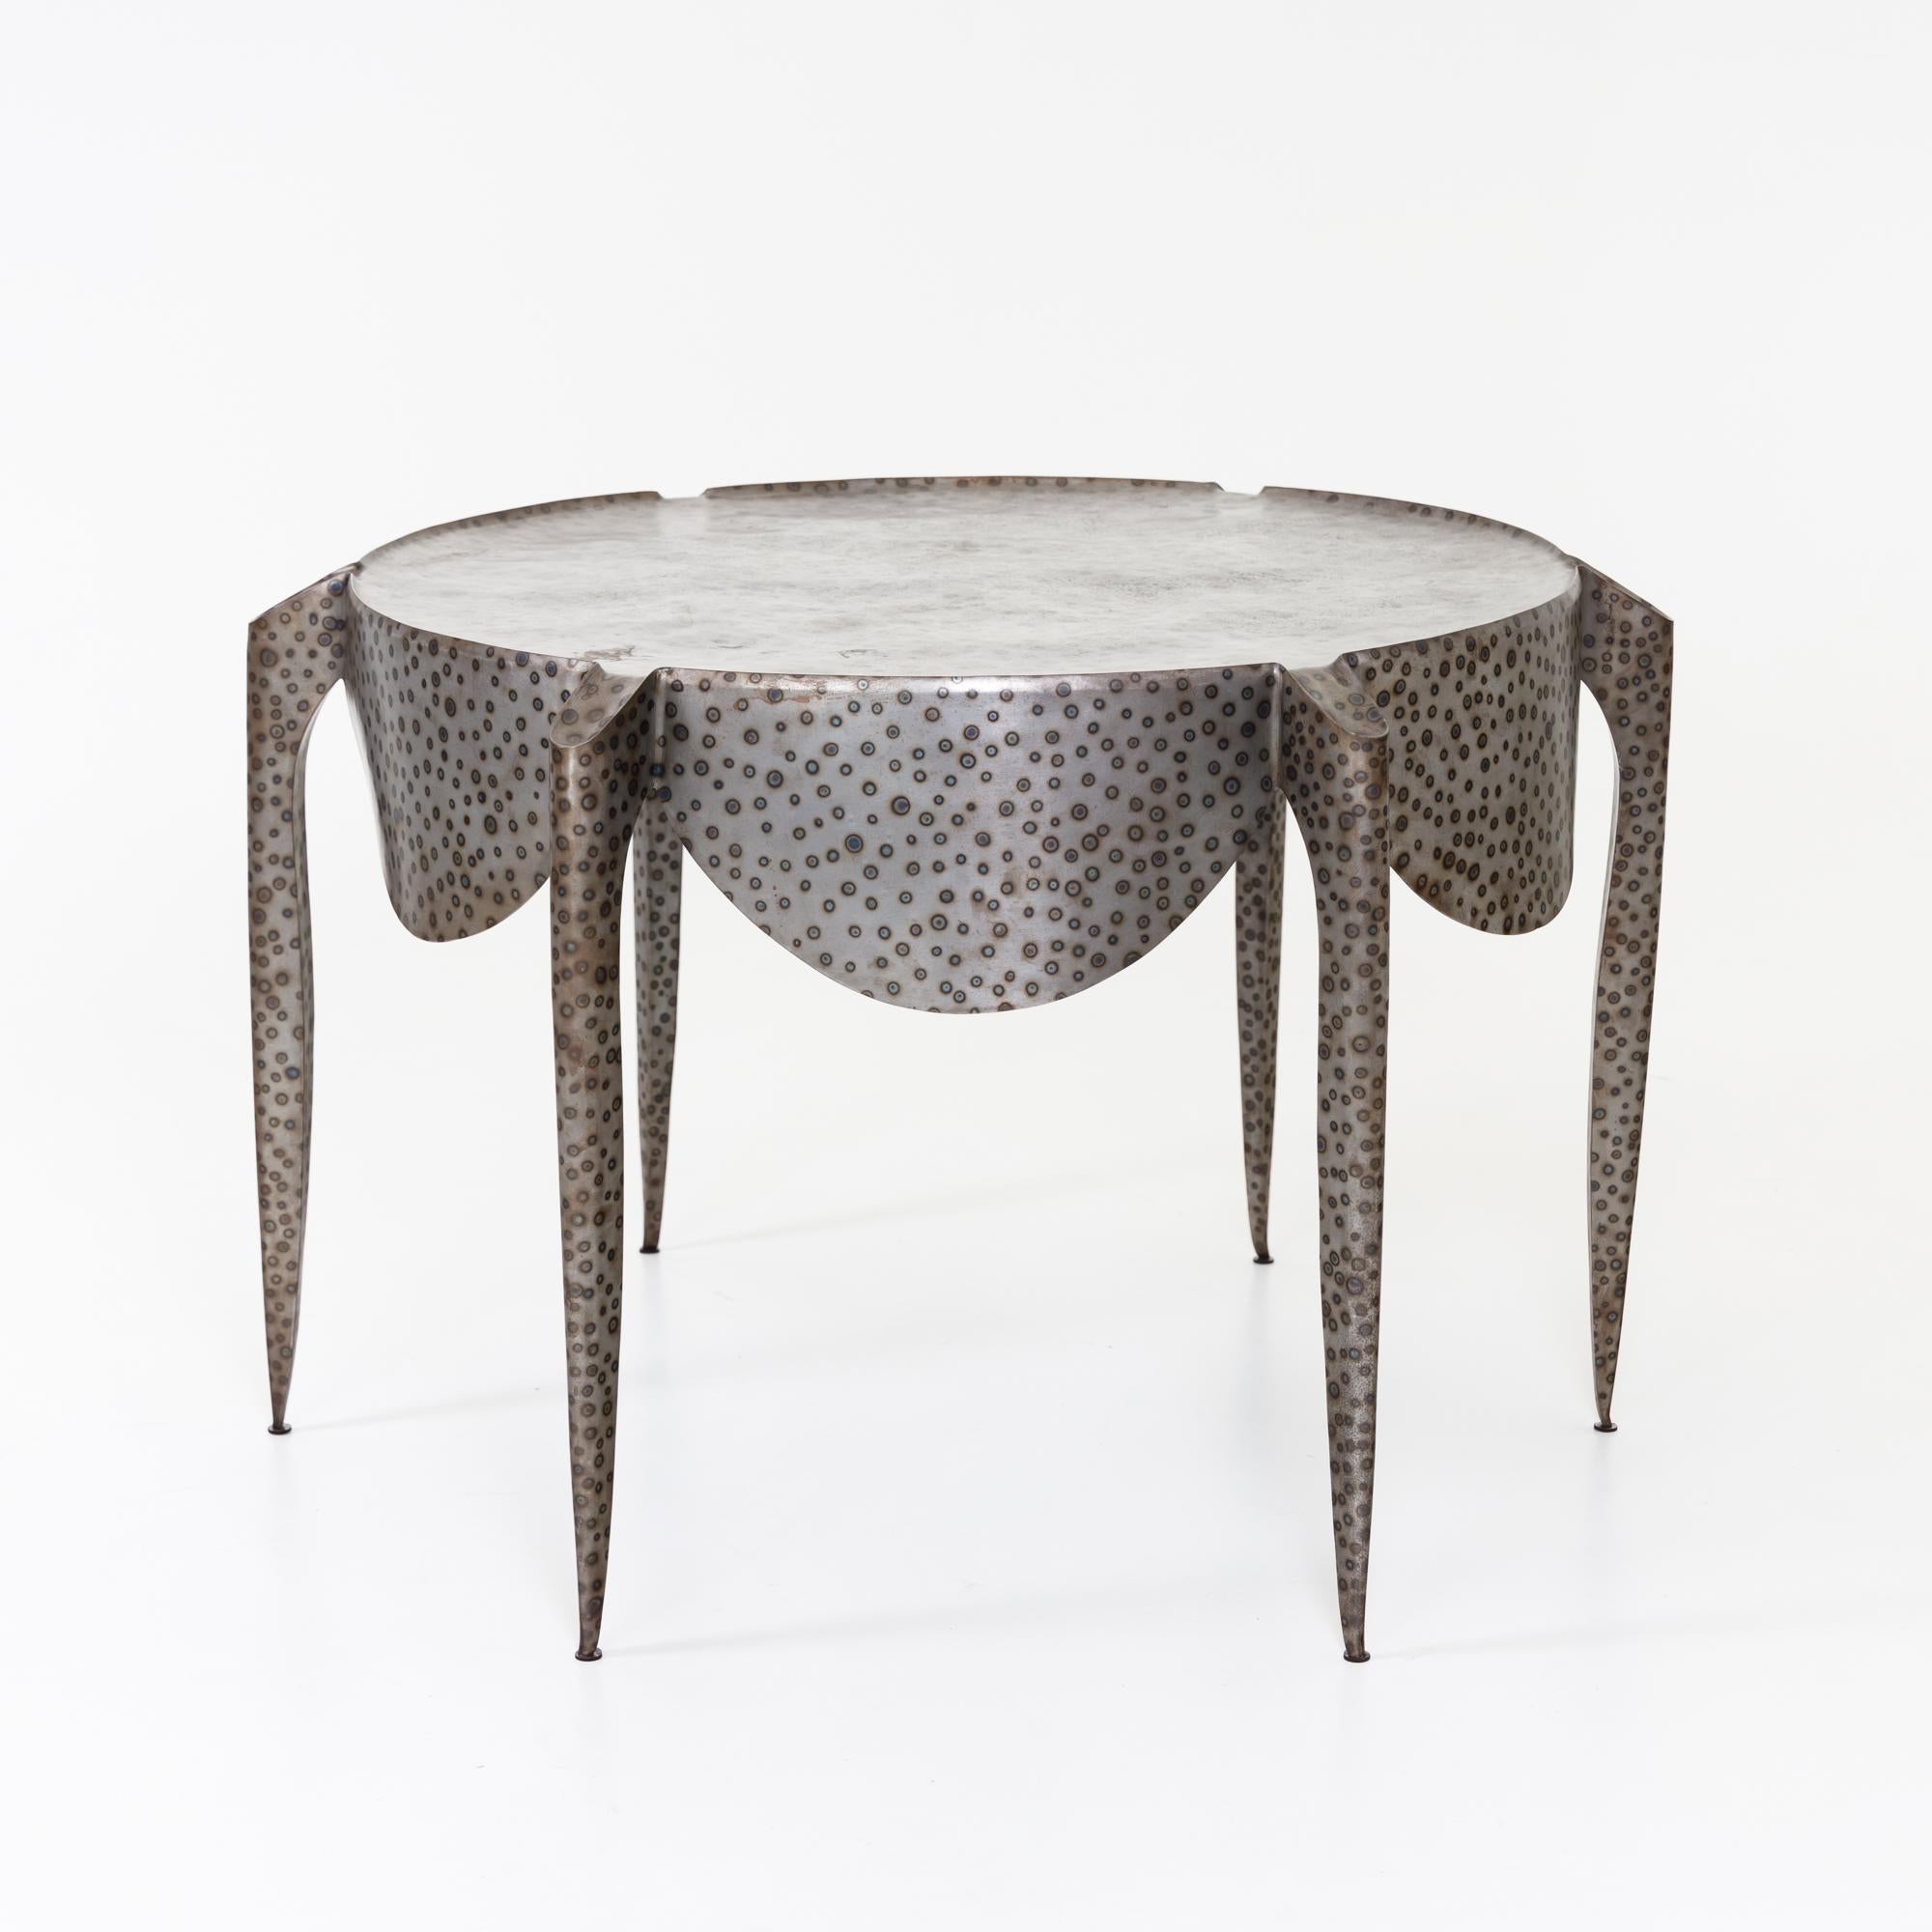 Metalwork André Dubreuil (*1951), Paris Table, France, designed in 1988  For Sale